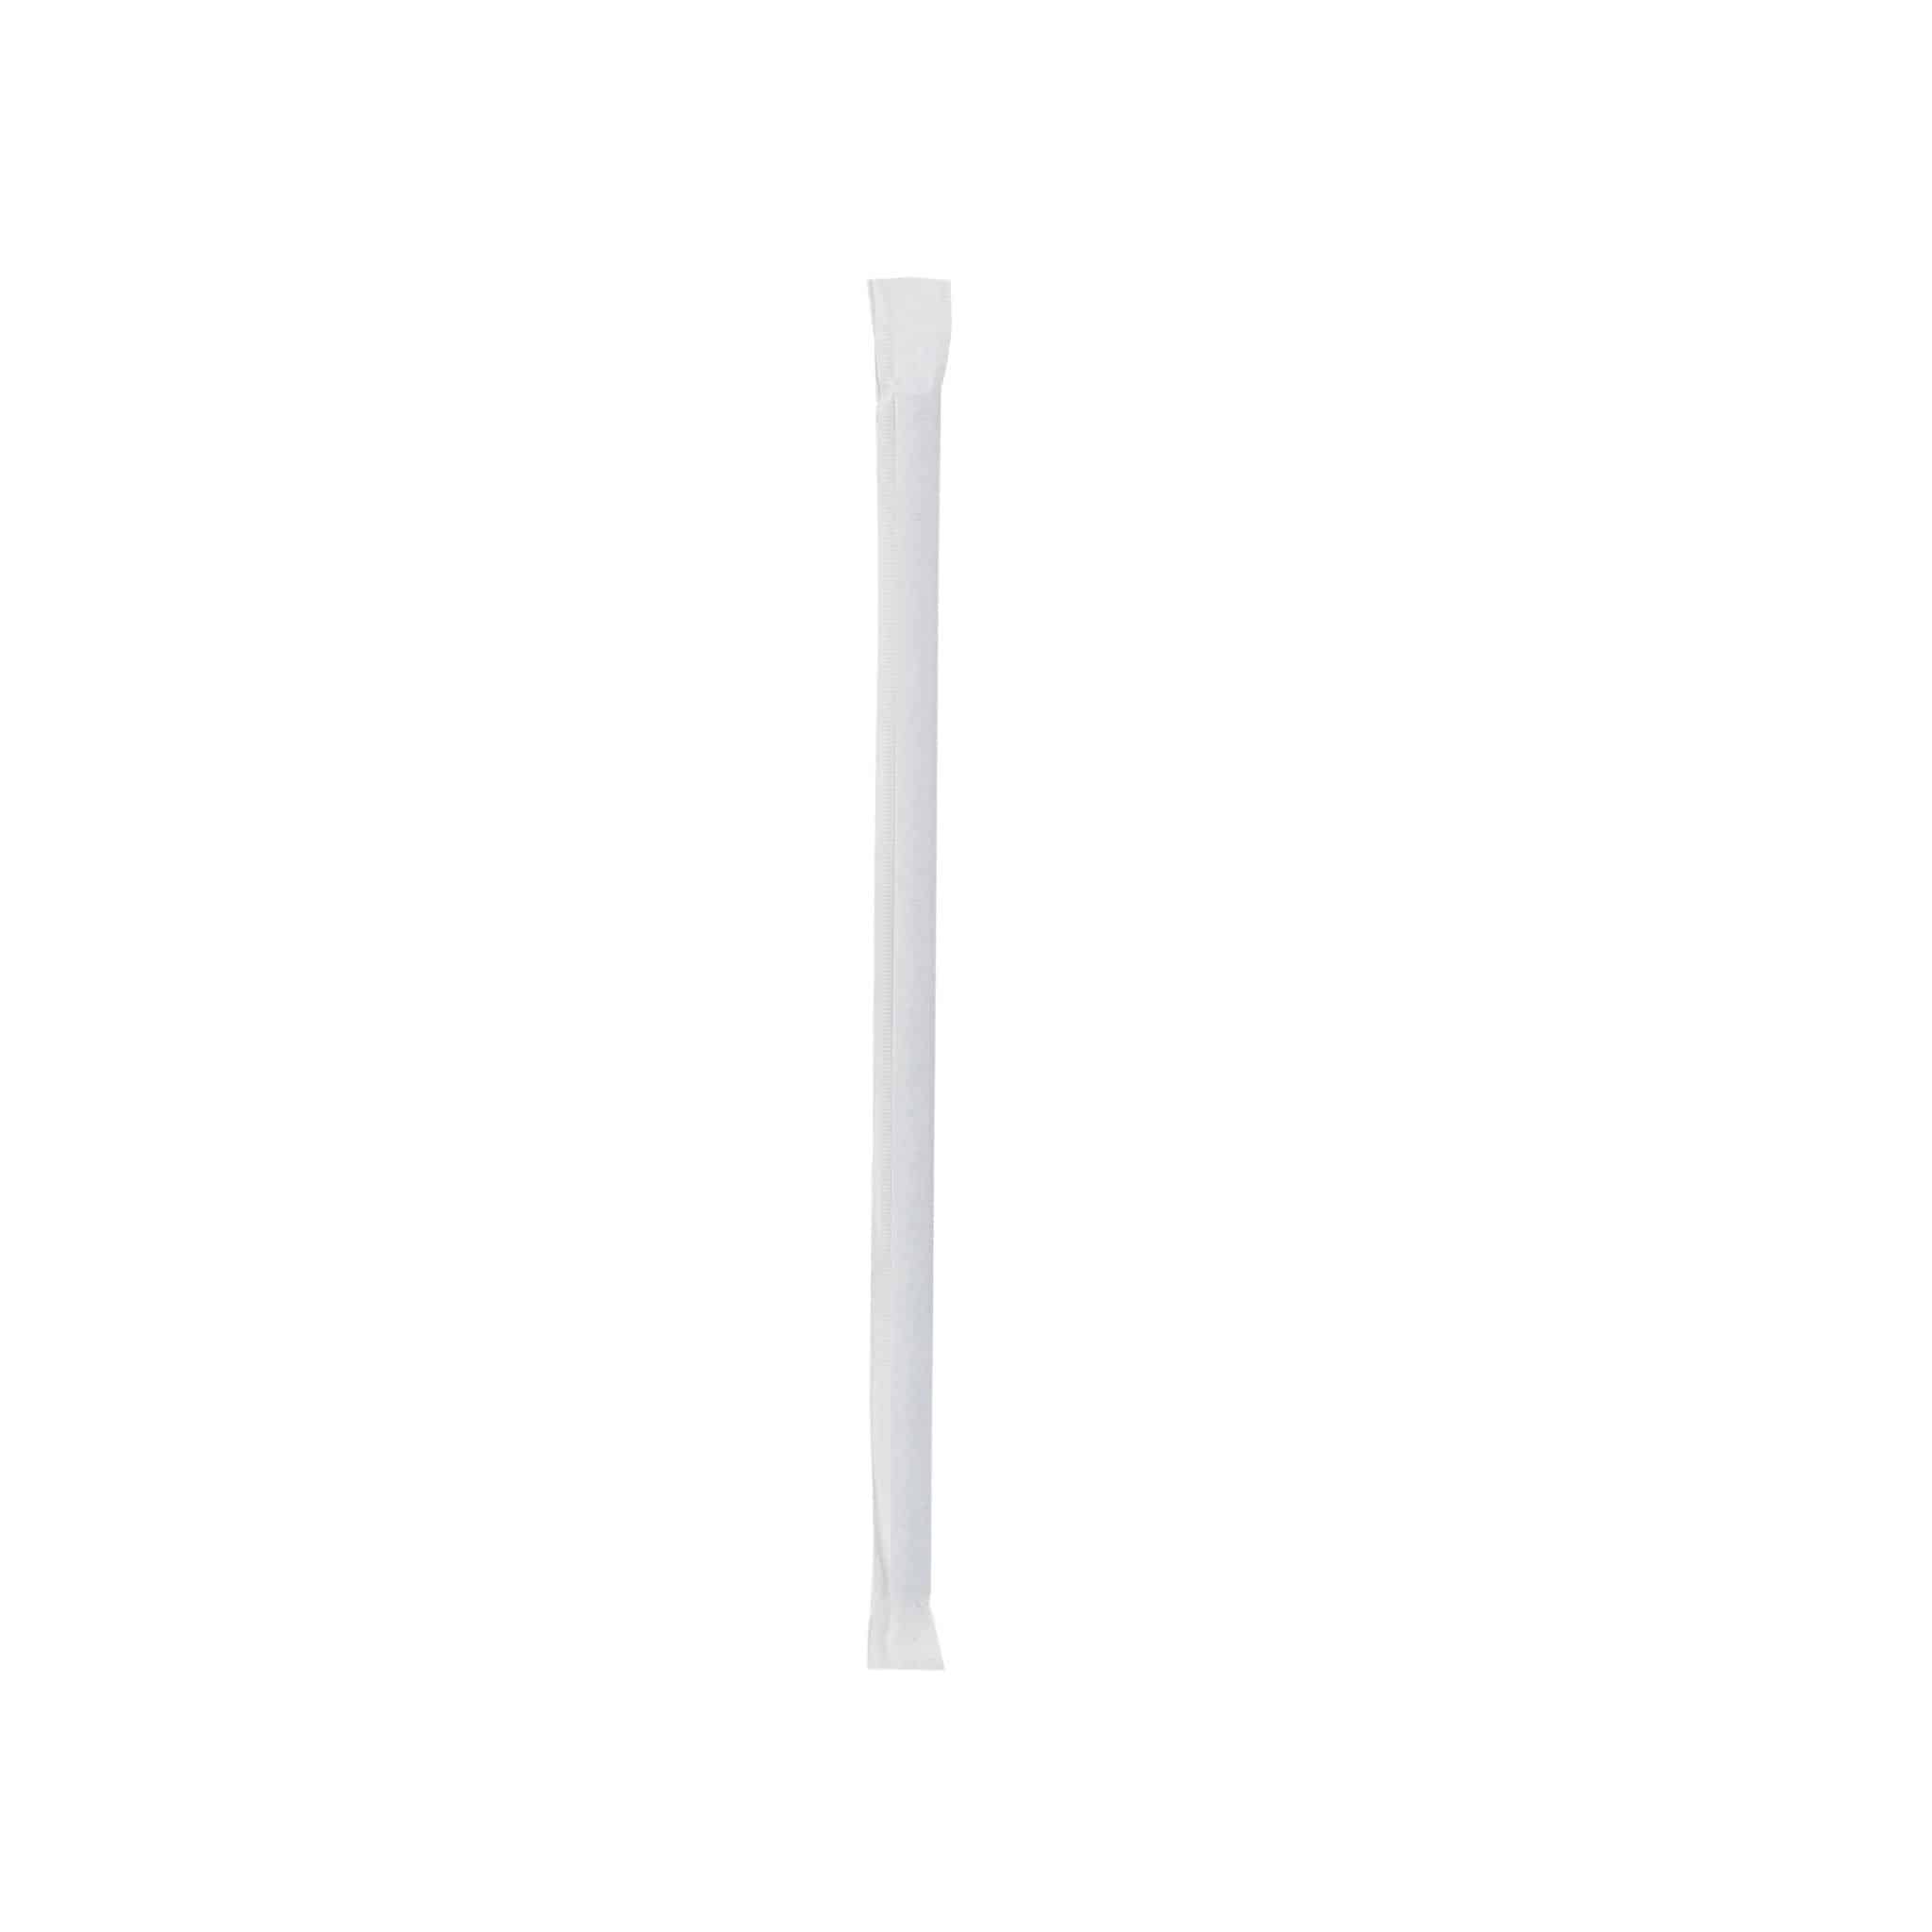  Clear Plastic Straw